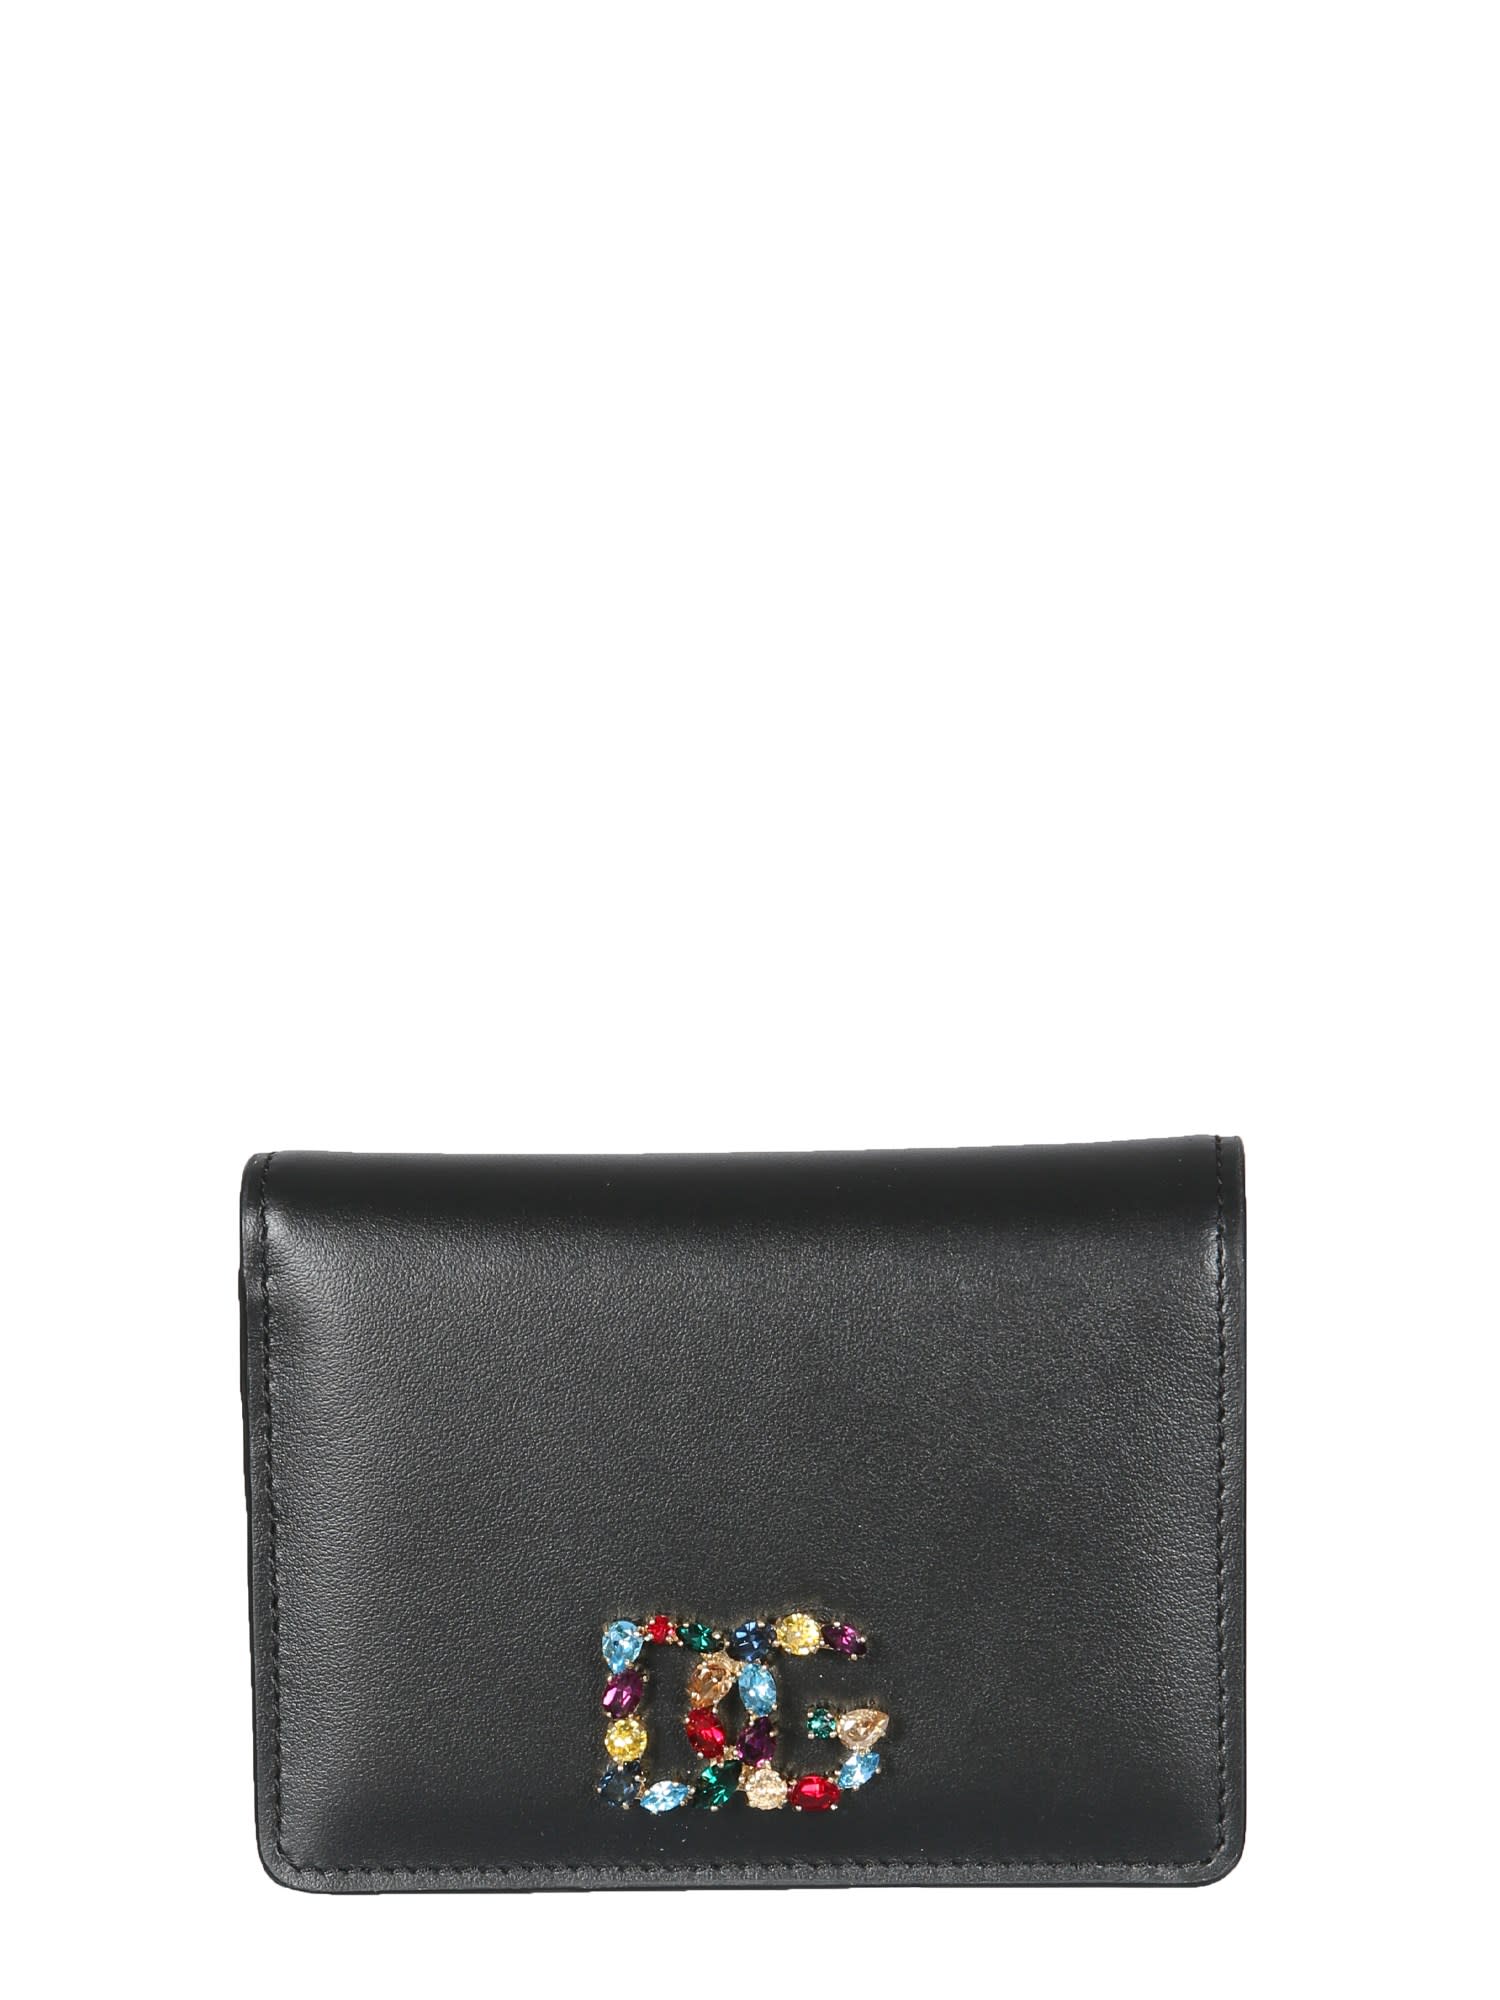 Dolce & Gabbana Small Continental Wallet